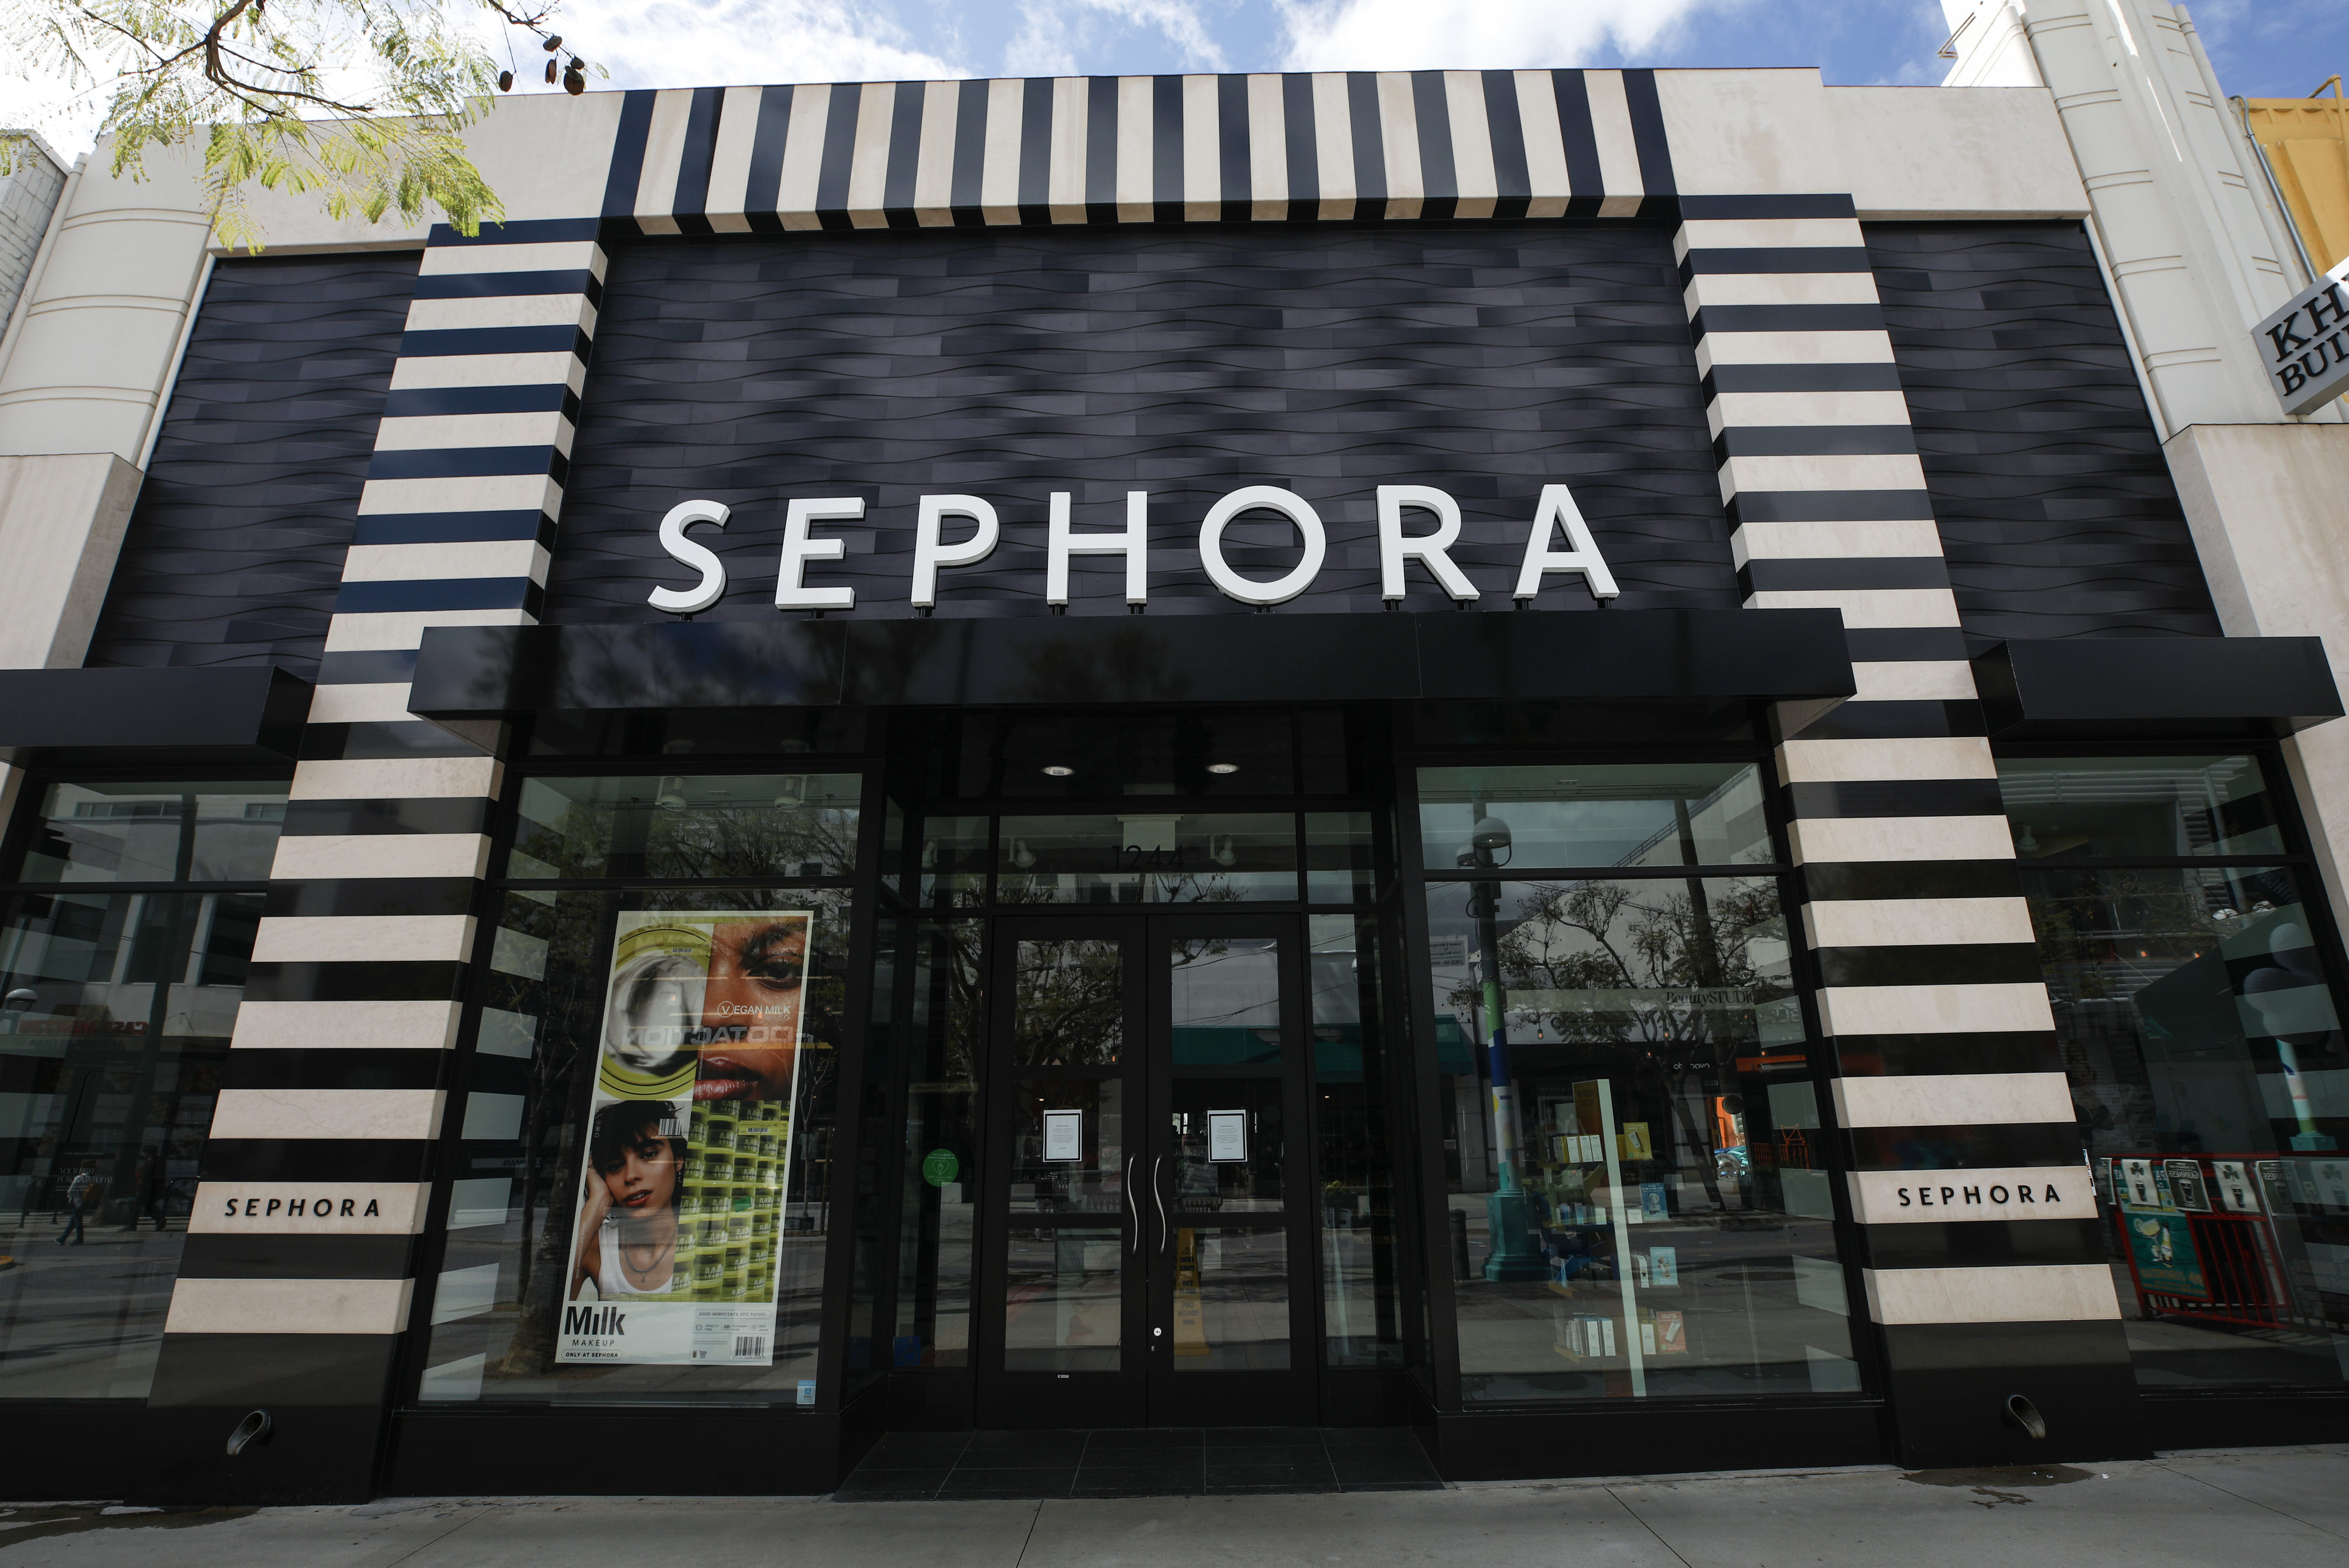 Sephora Celebrates 25 Years In The USA